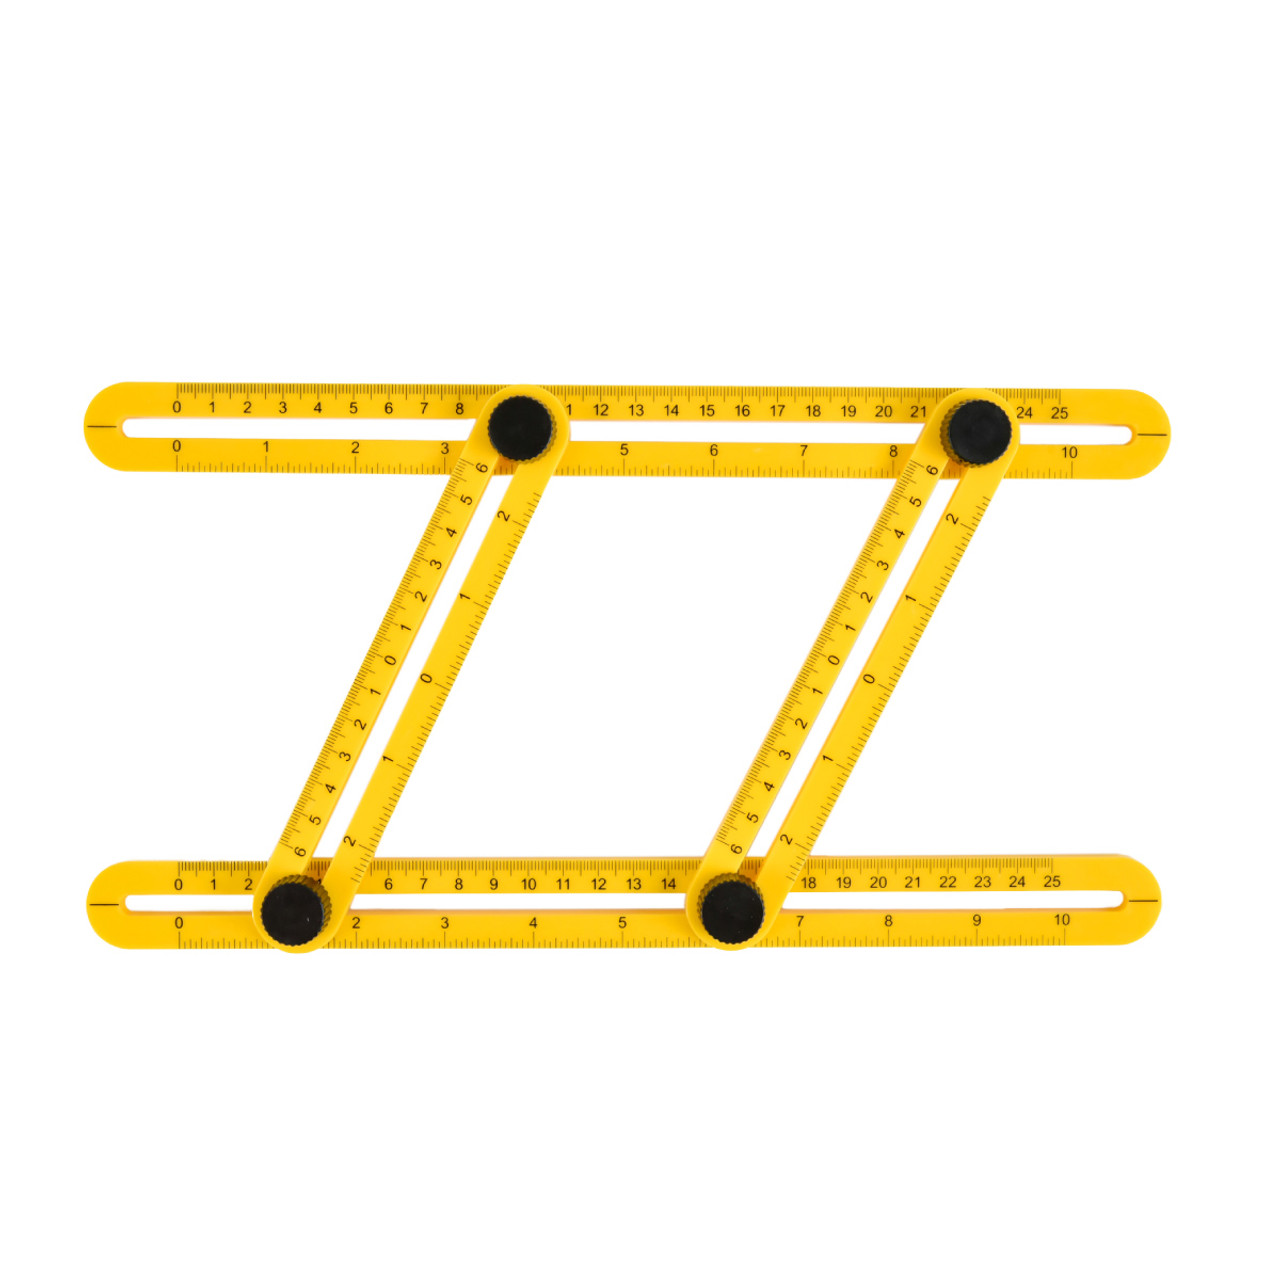 TGR Multi-Angle Ruler Template Tool